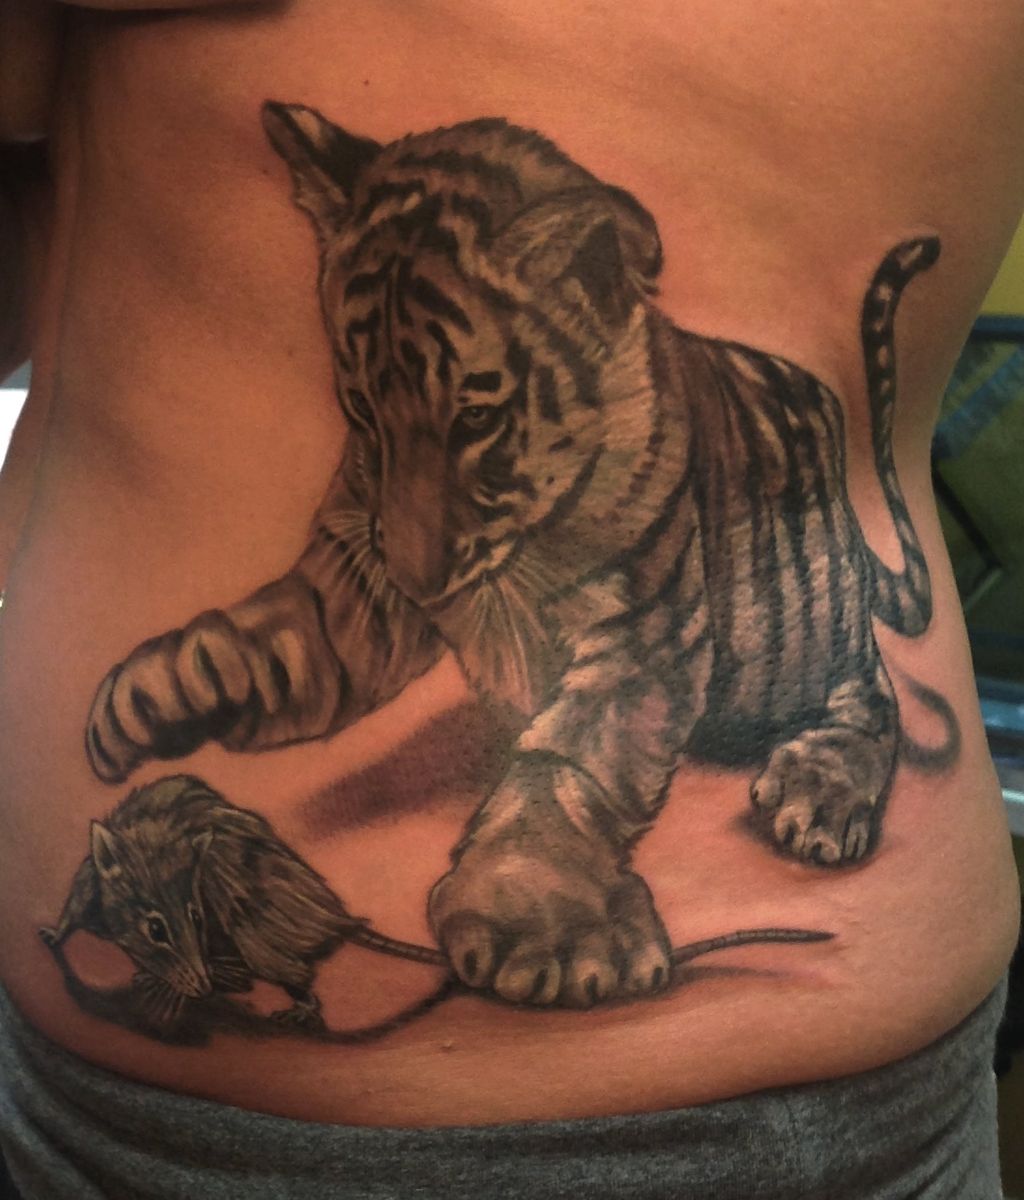 Got Your Tail! Tattoo City Skin Art Studio :